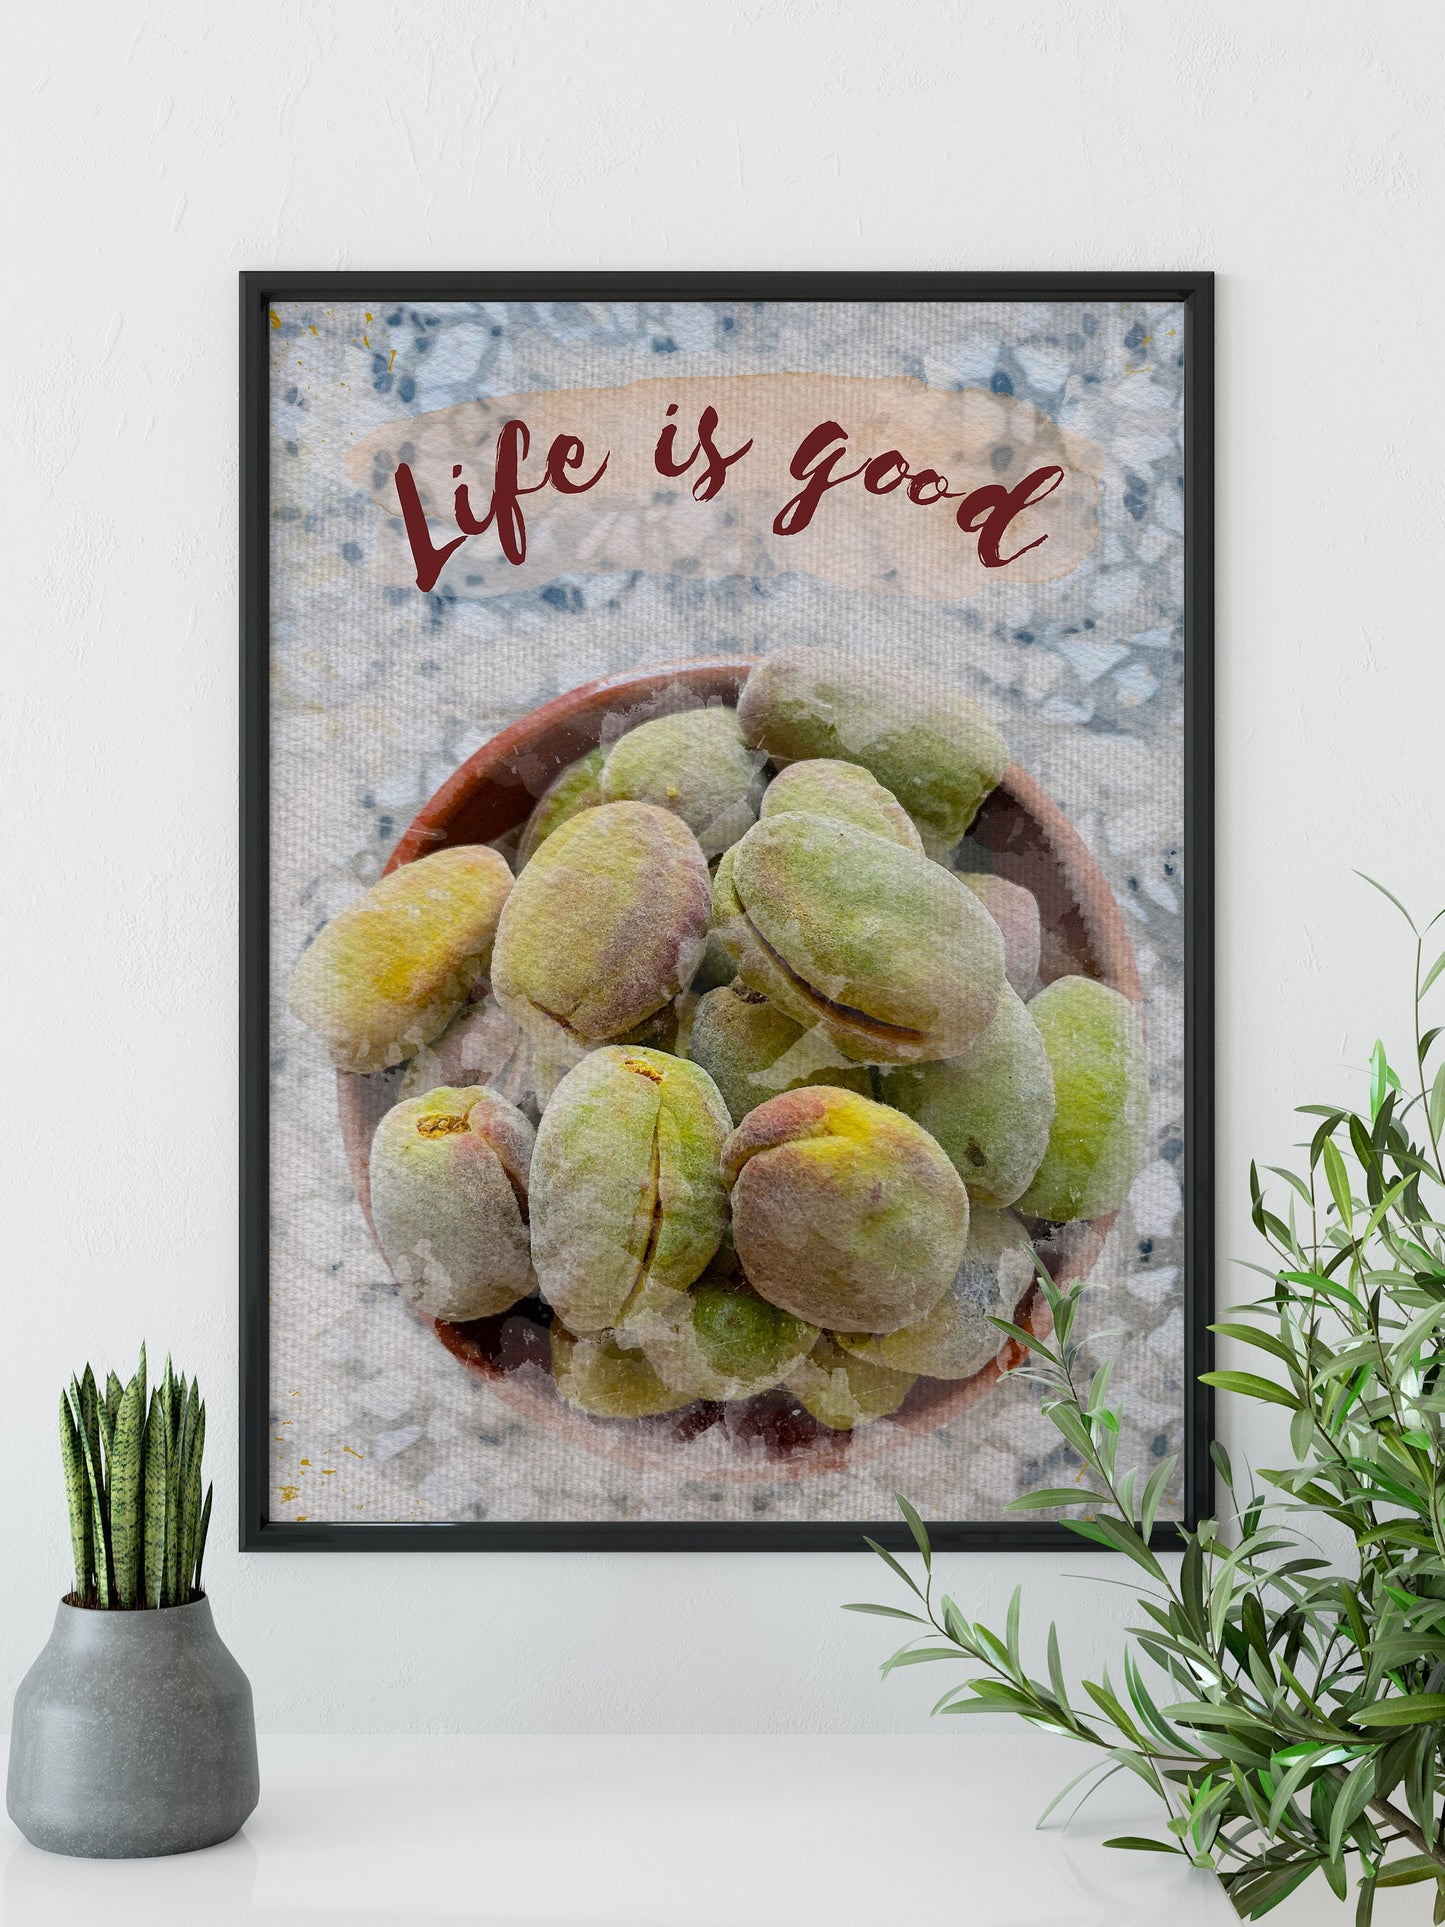 Sweet Almond Botanical Print